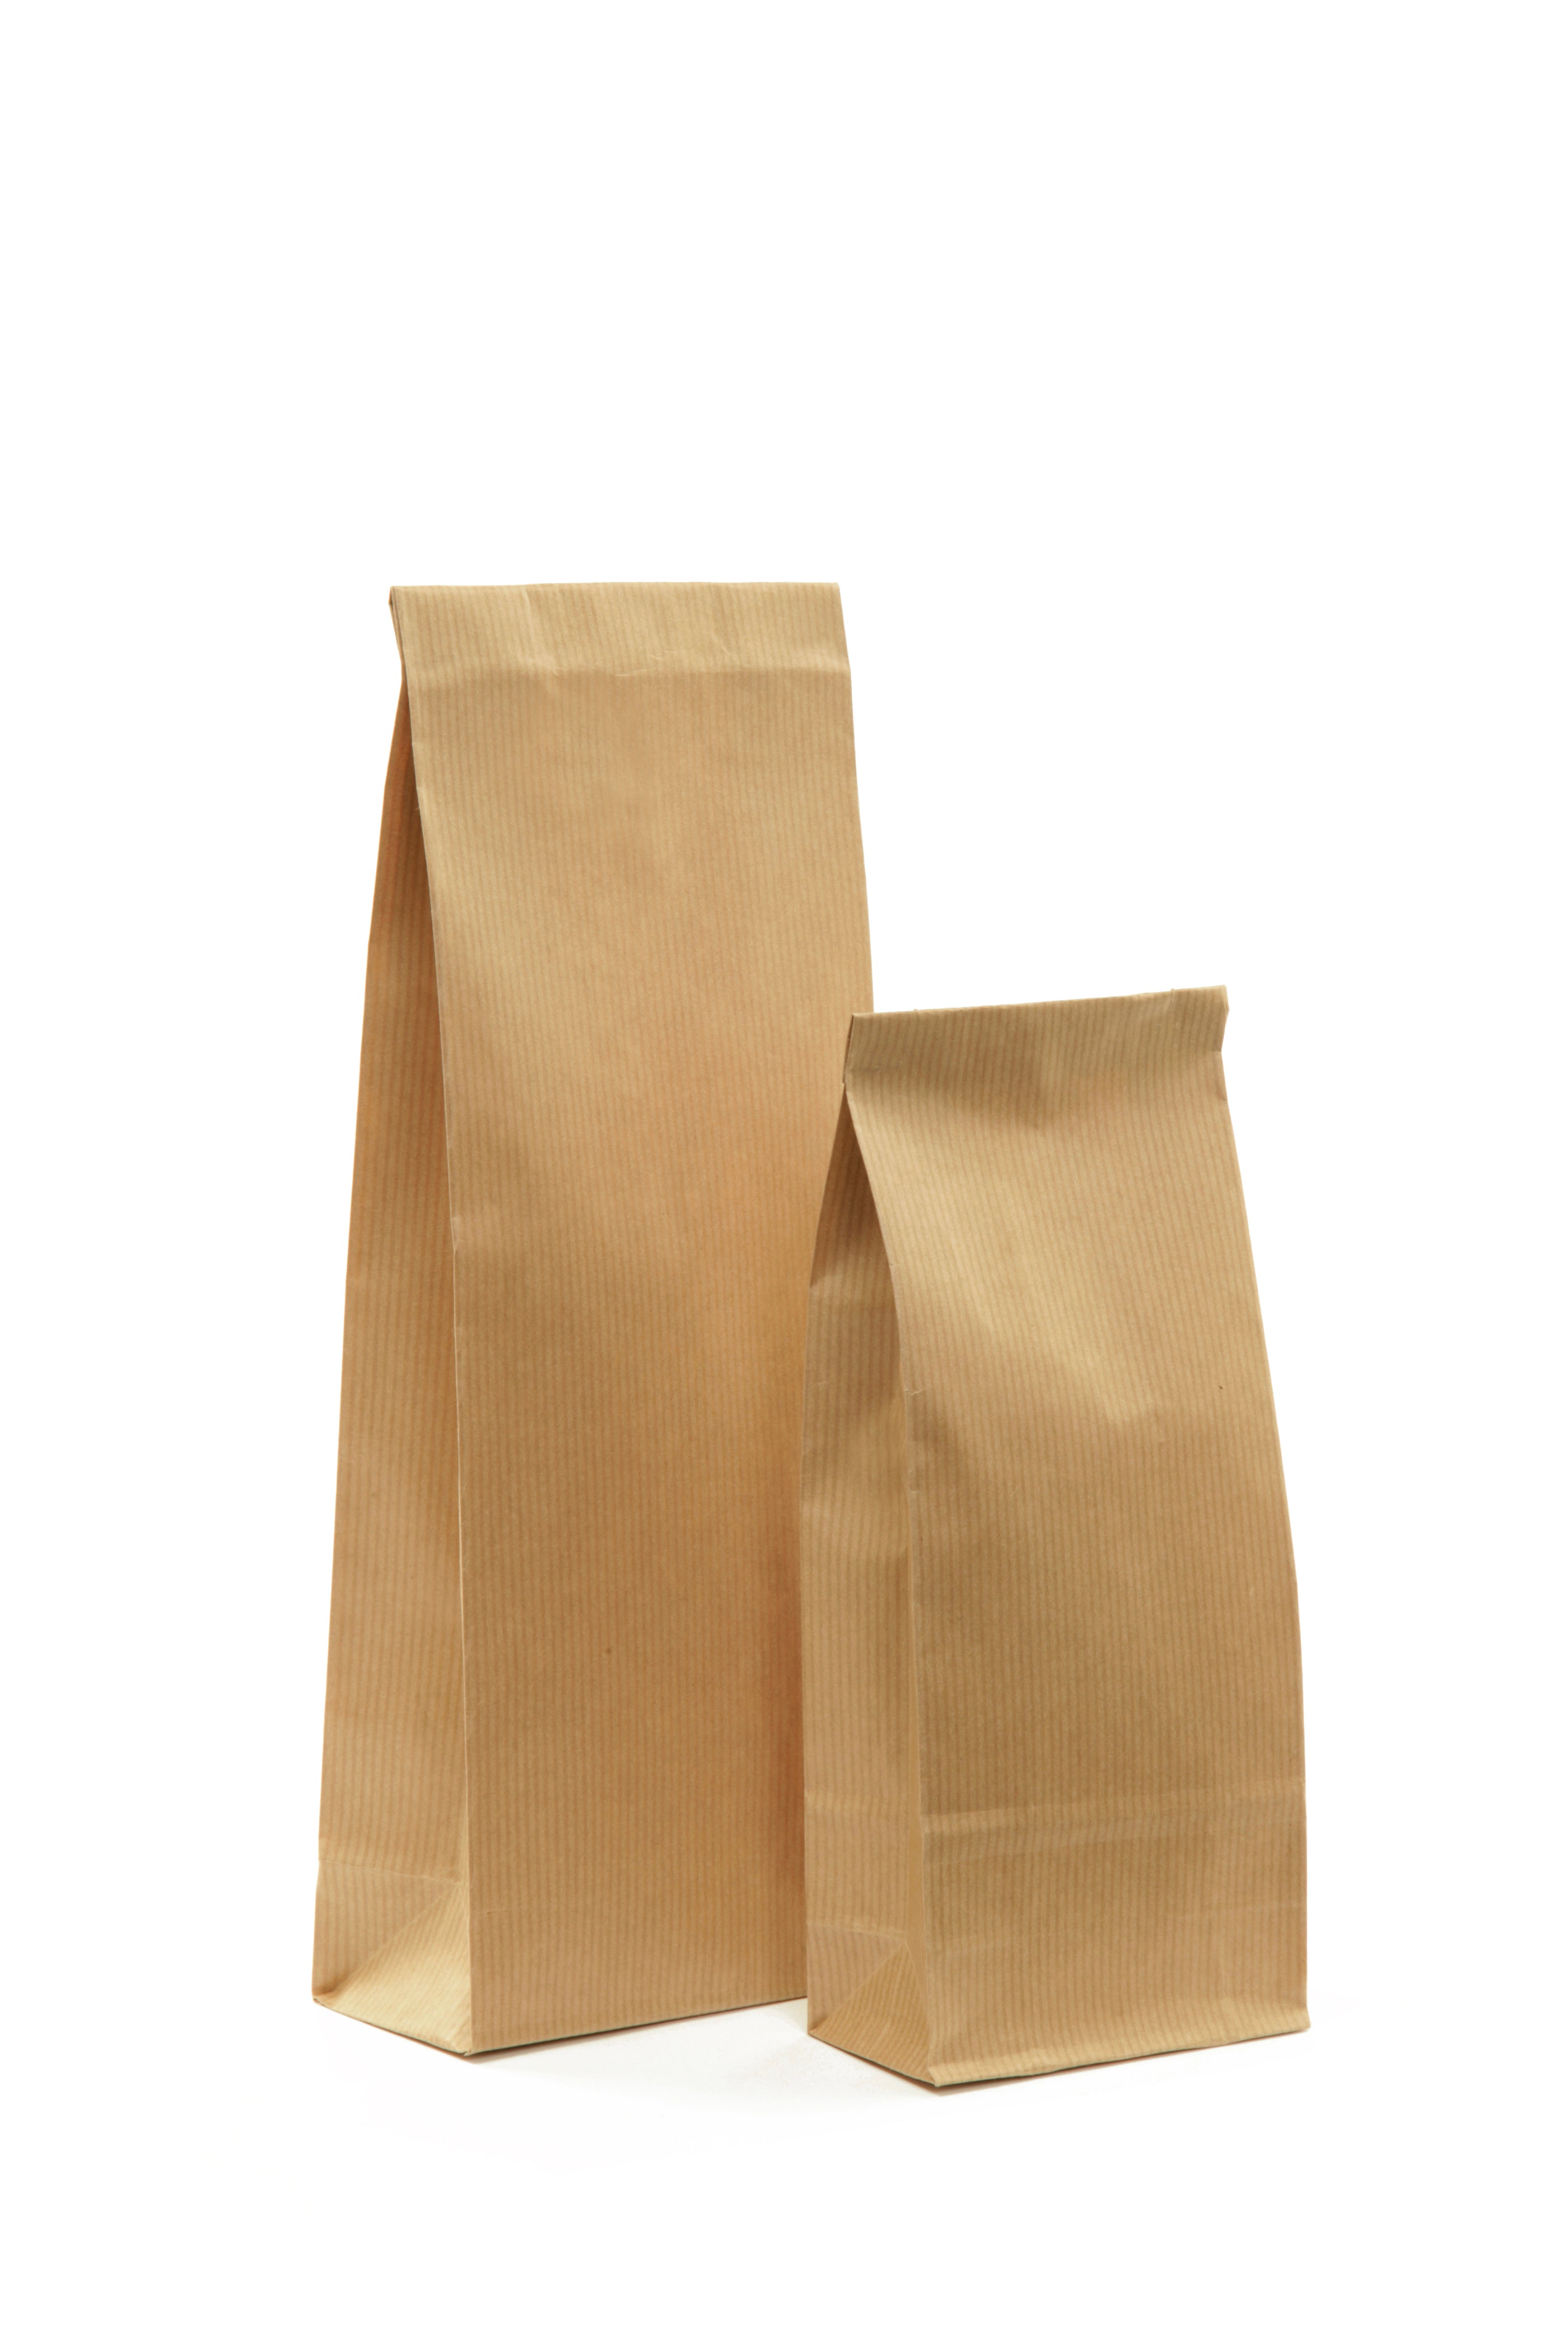 DittaDisplay Retail Solution sac kraft alimentaire schwarzer Kraftbeutel intensive kraft food bag